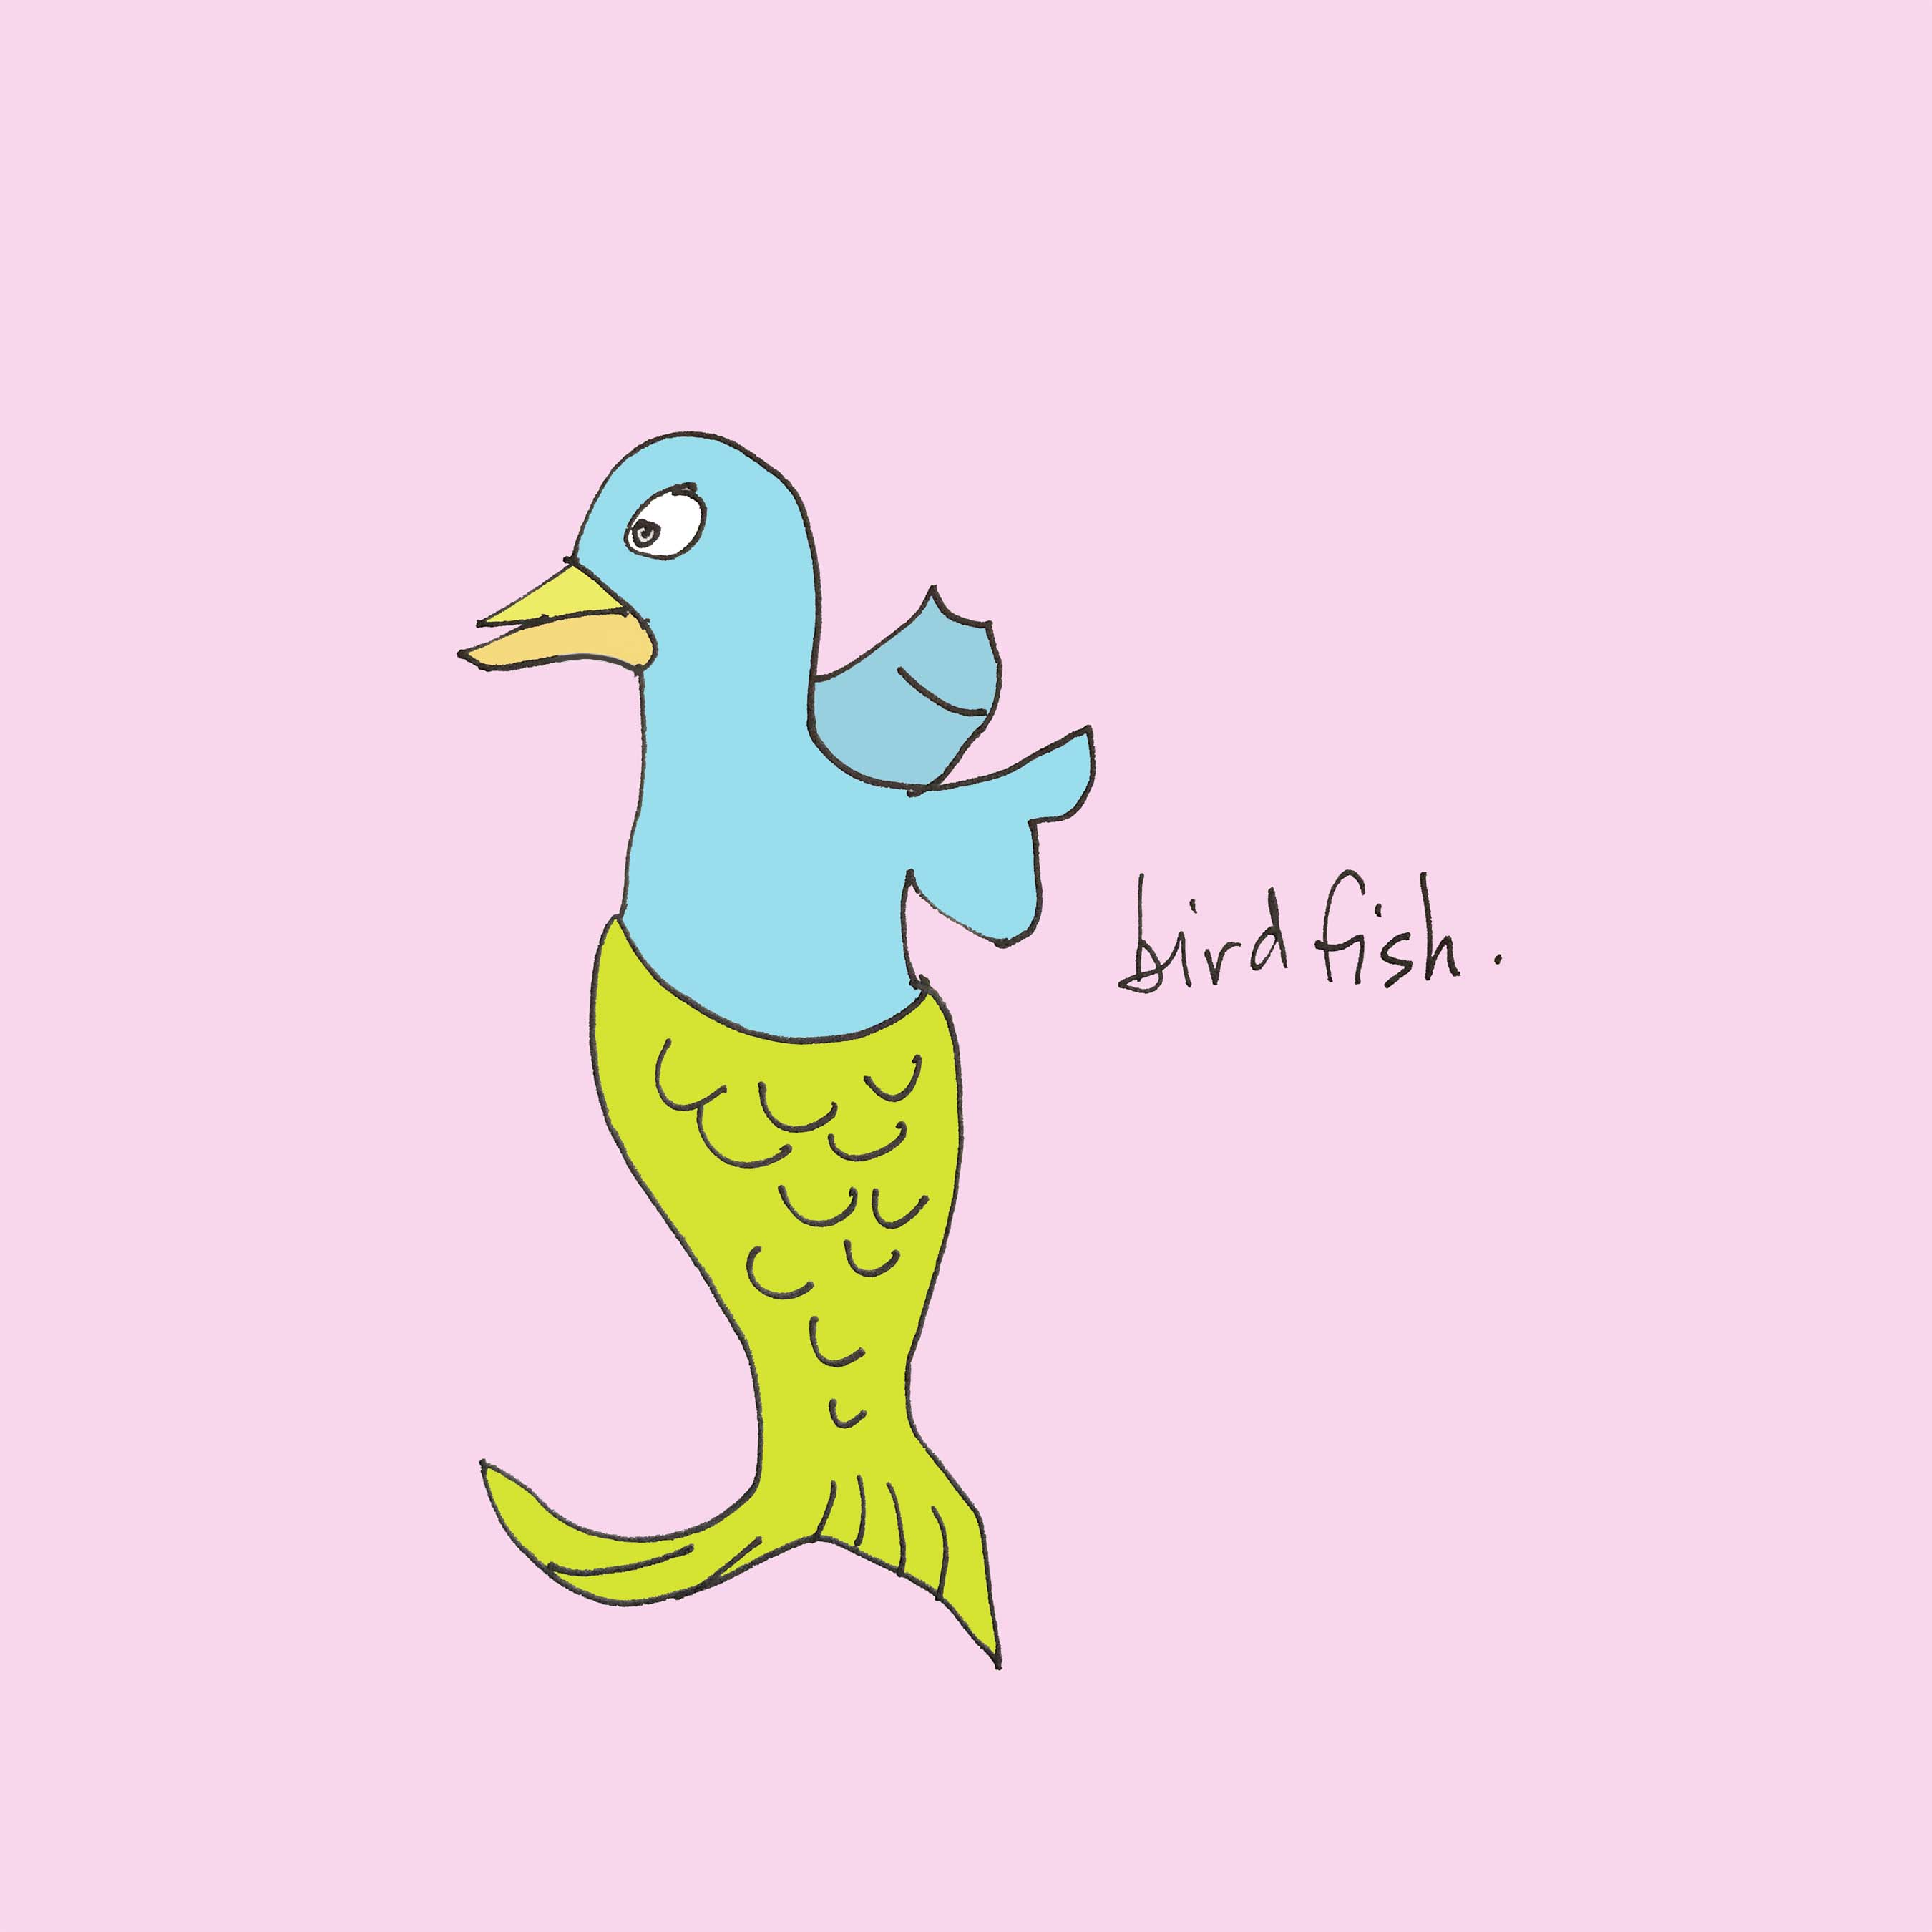 art every day number 320 / illustration / birdfish